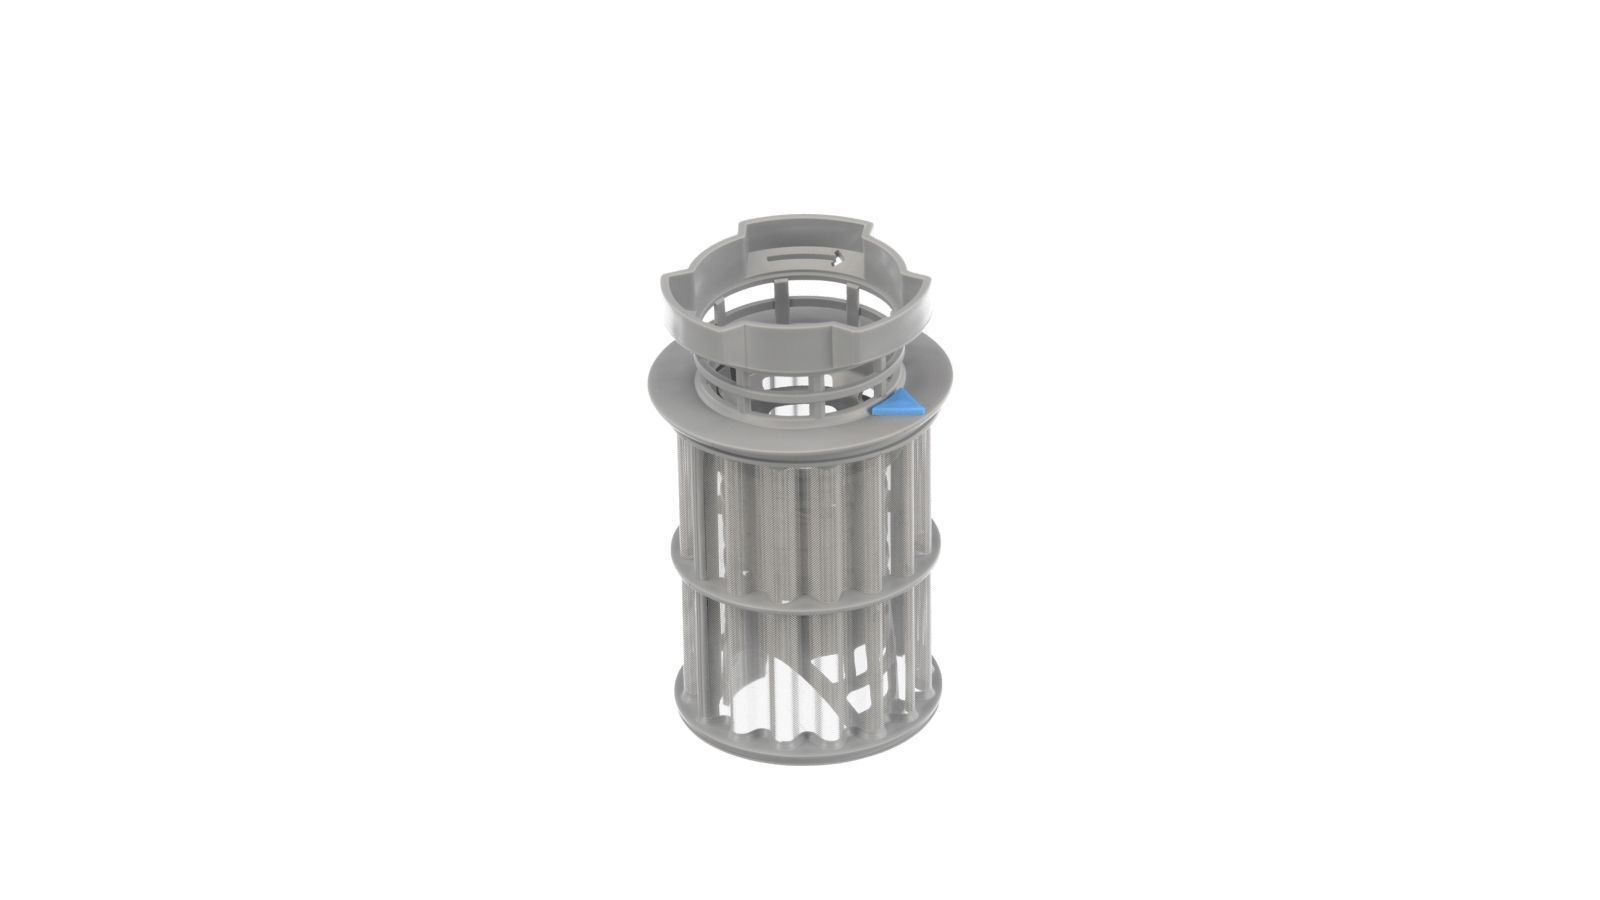 Microfilter, Filter for Bosch Siemens Dishwashers - Part nr. BSH 00645038 BSH - Bosch / Siemens